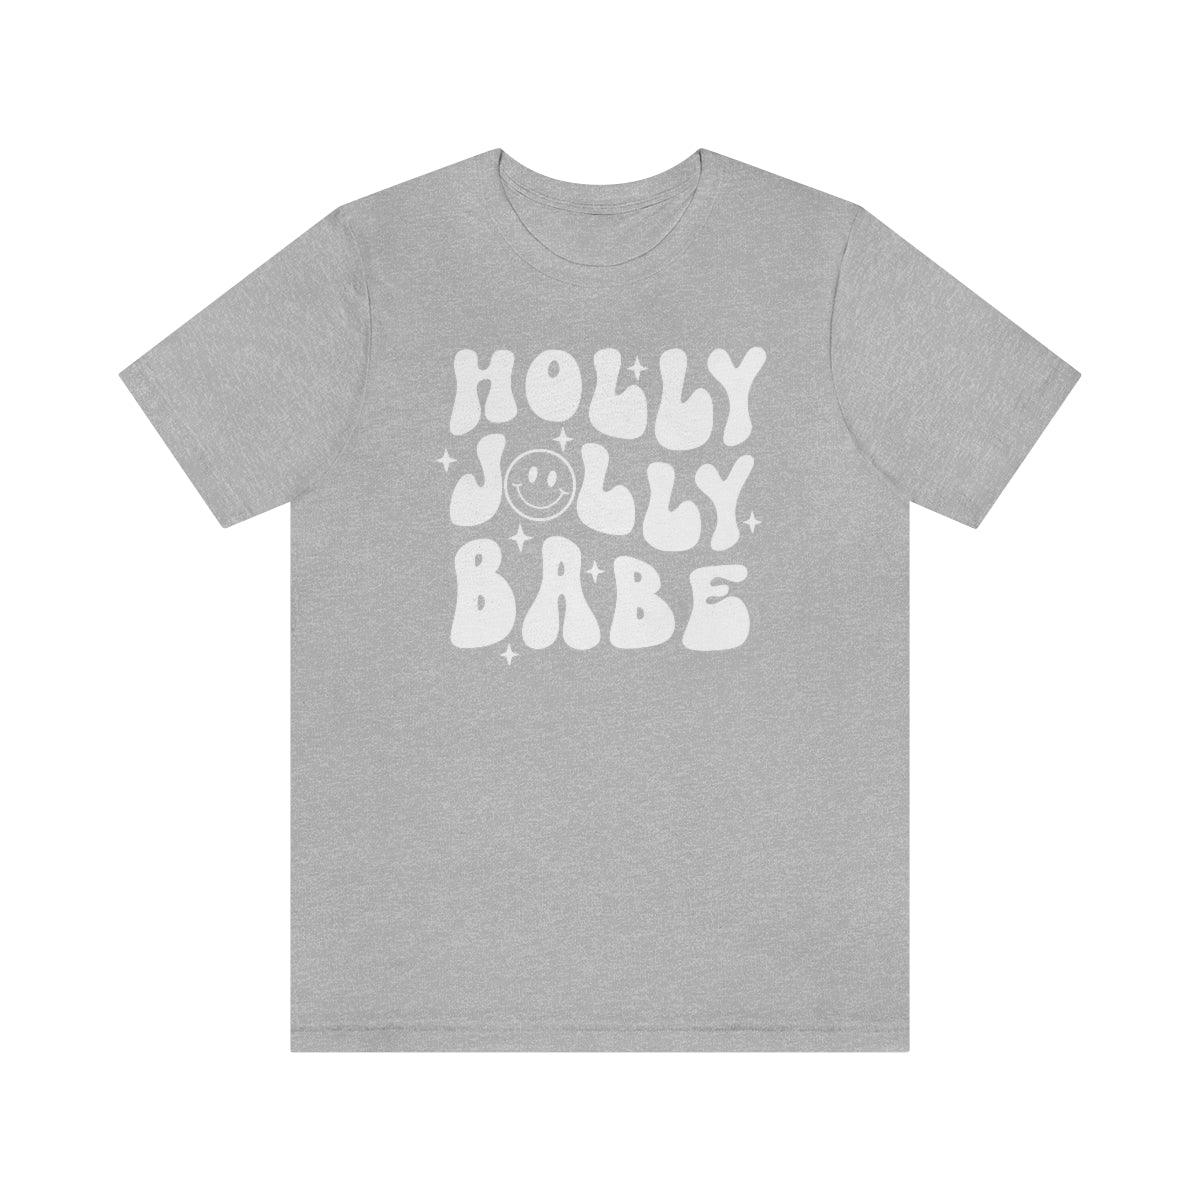 Retro Holly Jolly Babe Christmas Shirt Short Sleeve Tee - Crystal Rose Design Co.